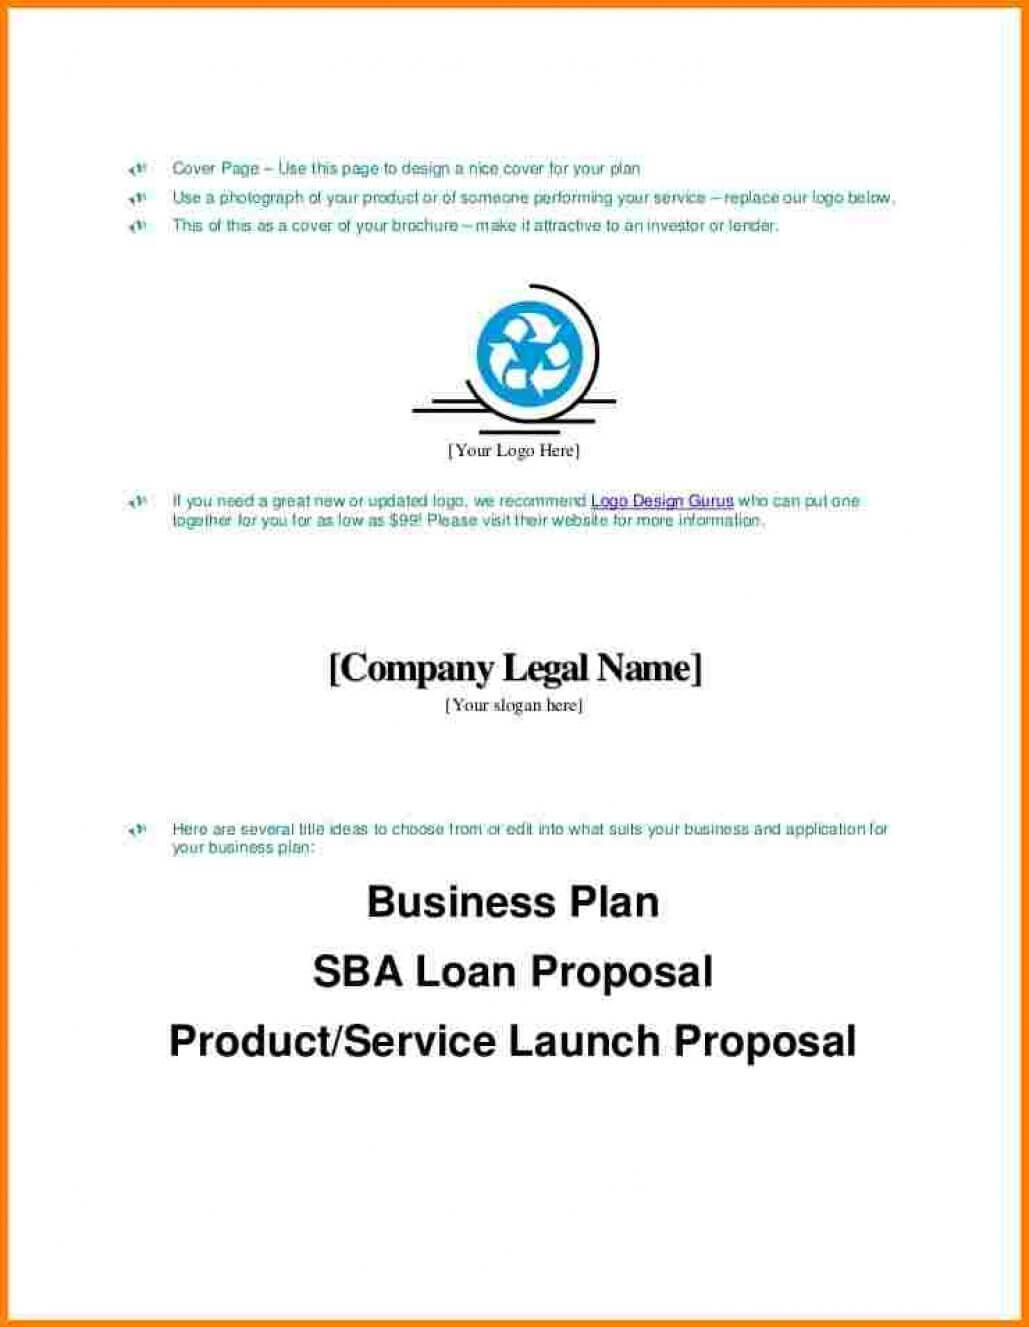 Business Plan Cover Page Sample Pdf Apa Format Letter With Business Plan Cover Page Template